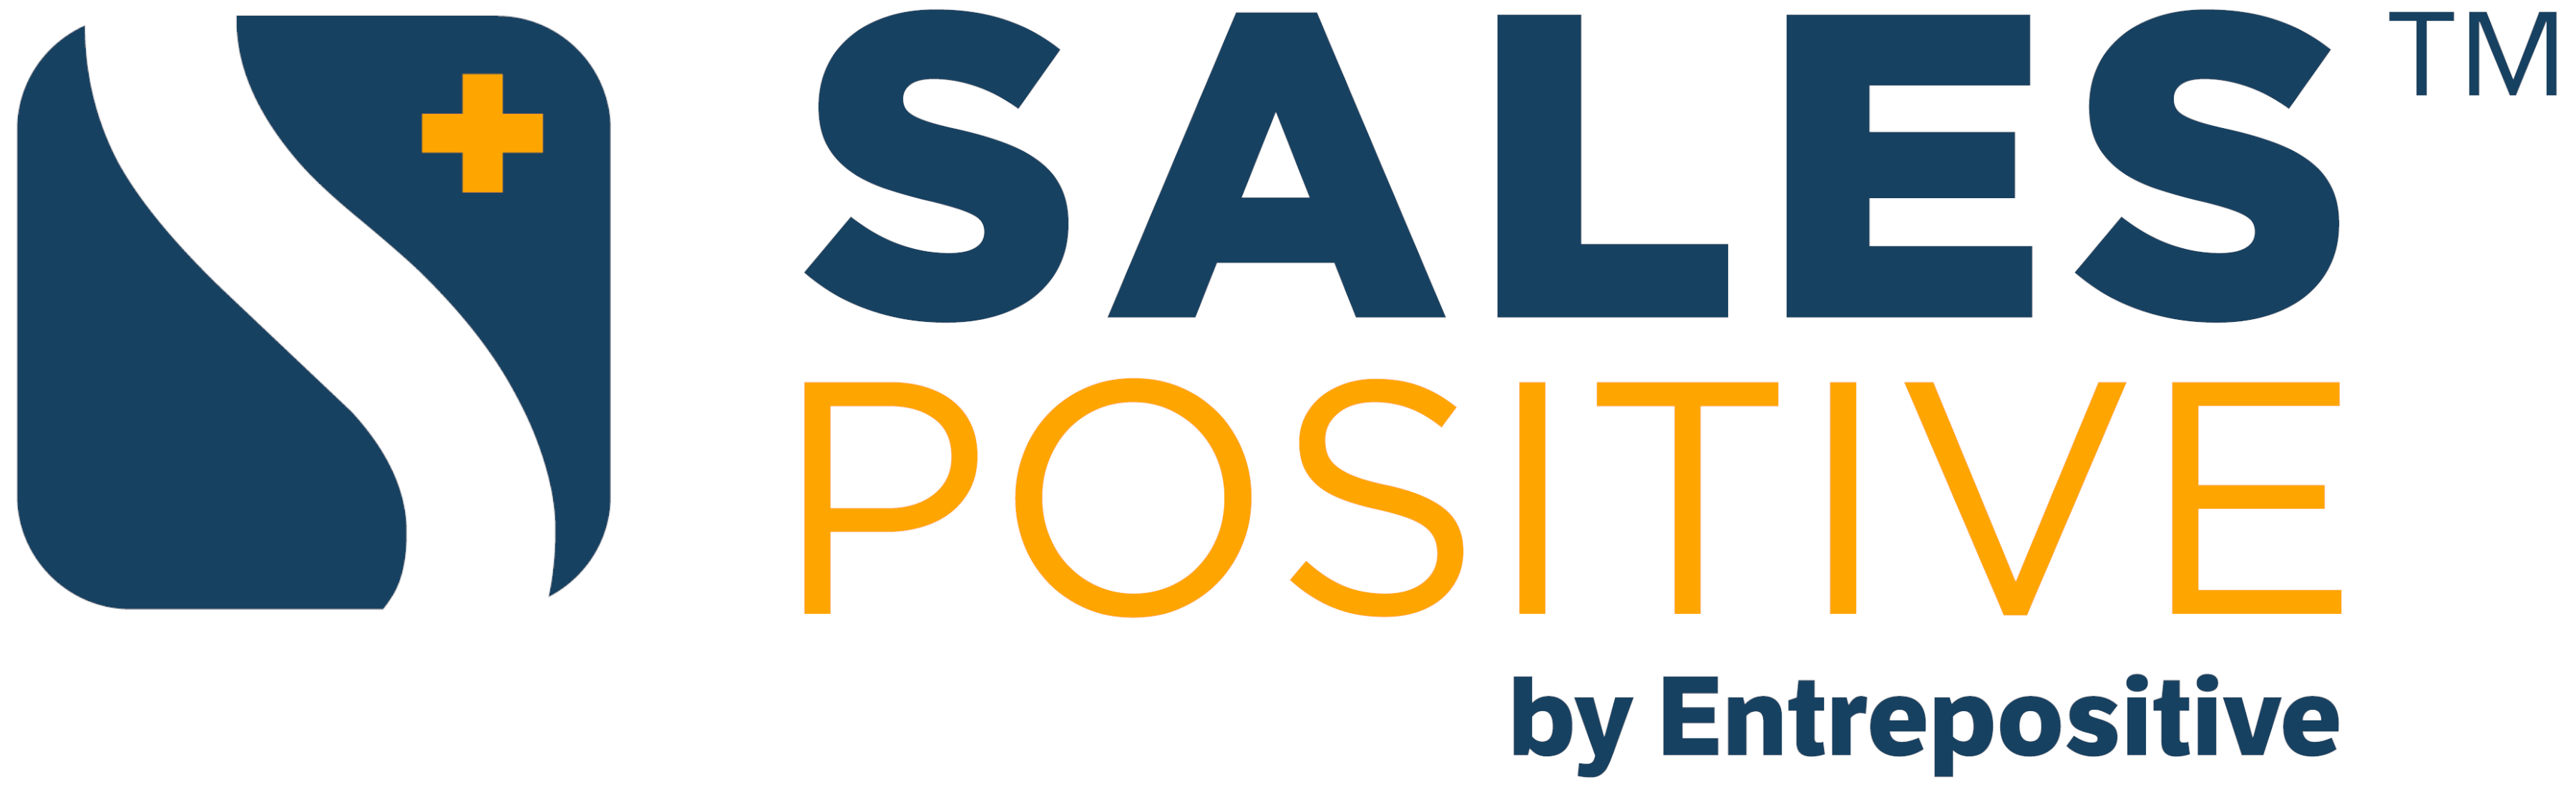 Salespositive™ logo lateral